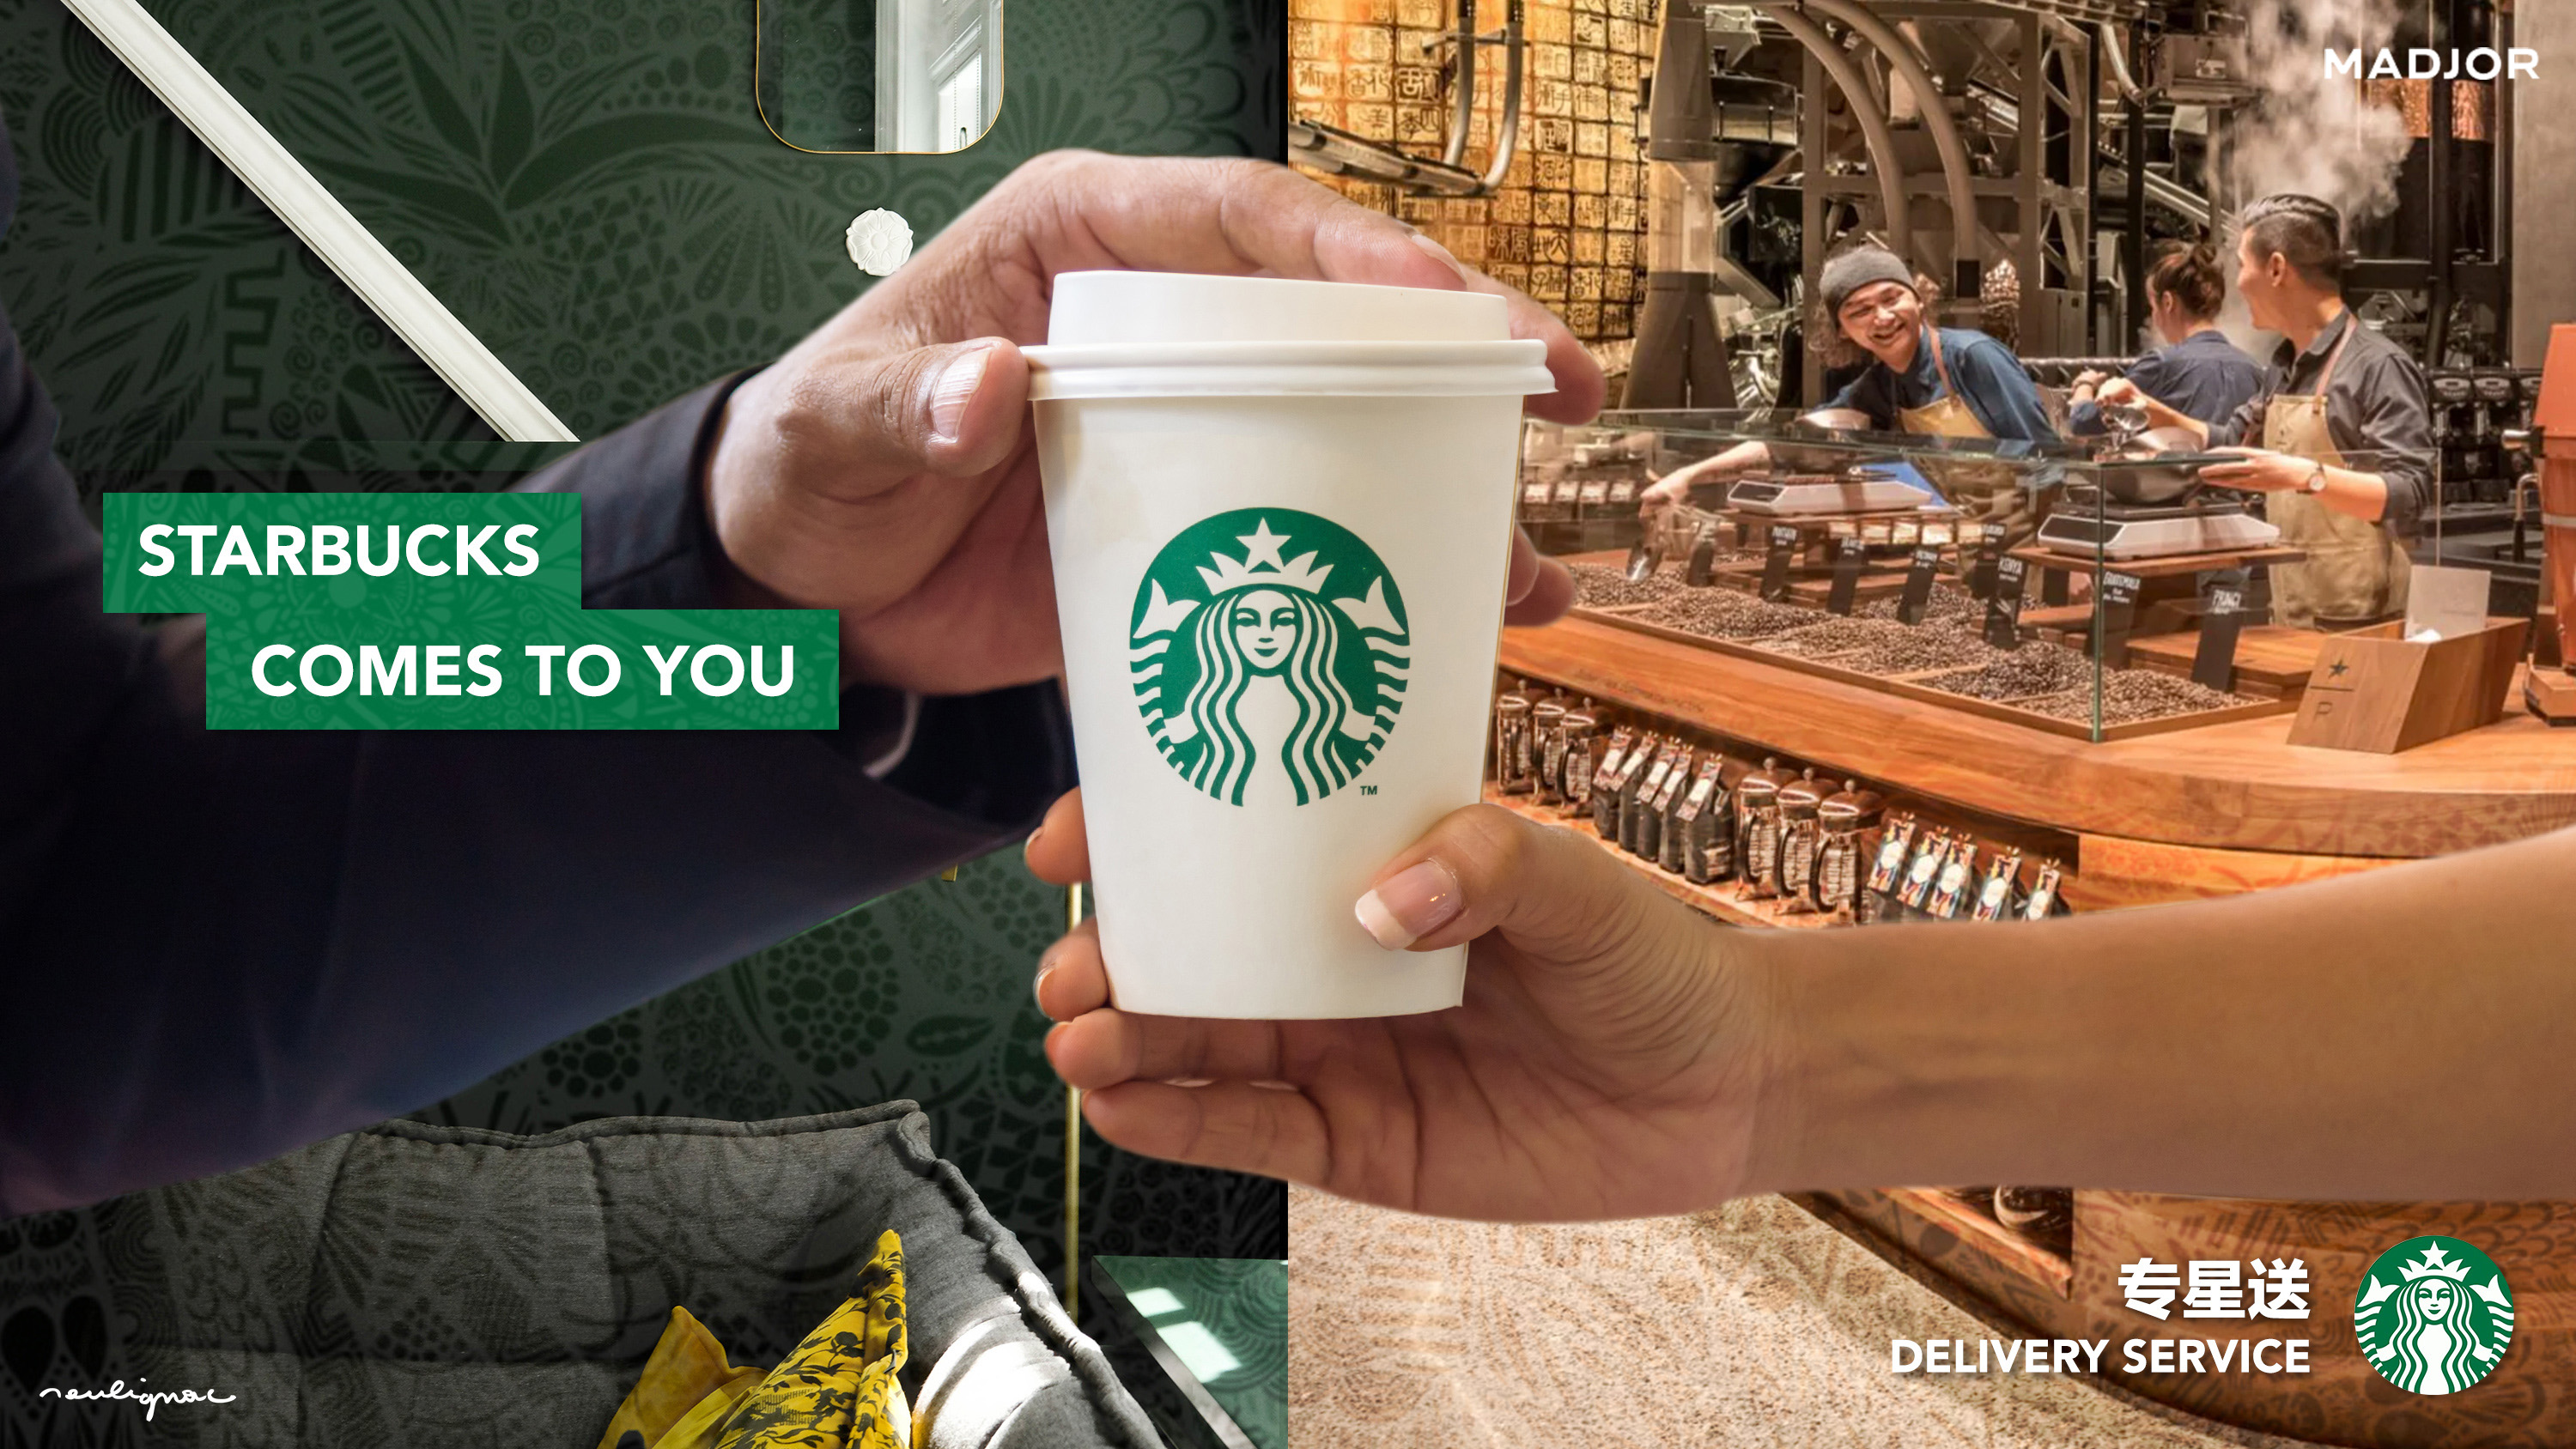 Starbucks China - Home Delivery Campaign - Key visual mockup - François Soulignac, Digital Creative & Art Direction - MADJOR Labbrand Shanghai